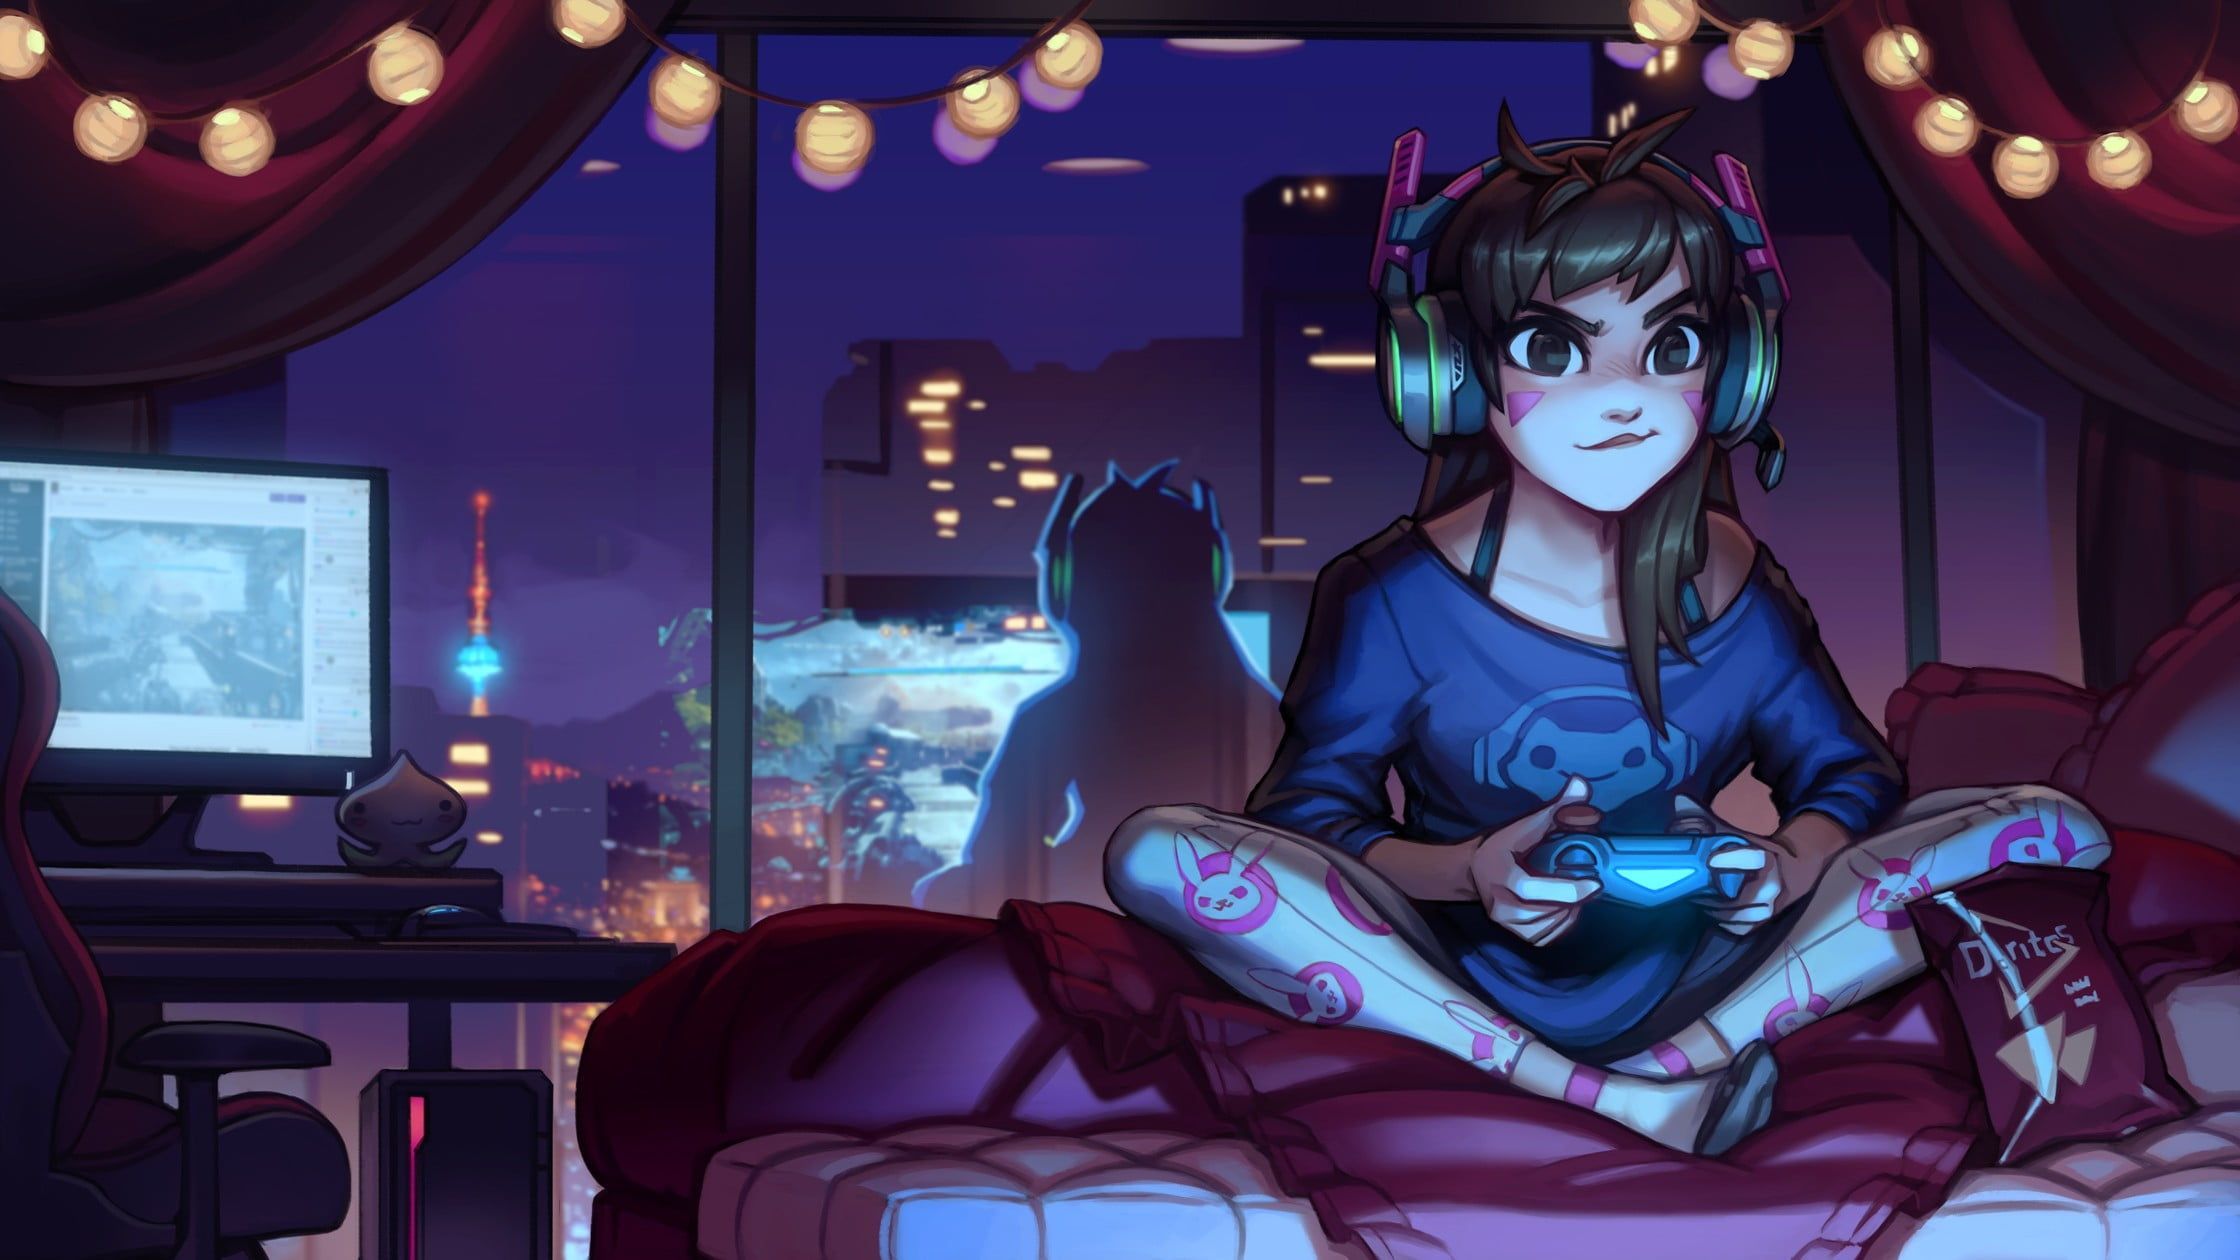 girl sitting on bed holding game controller illustration